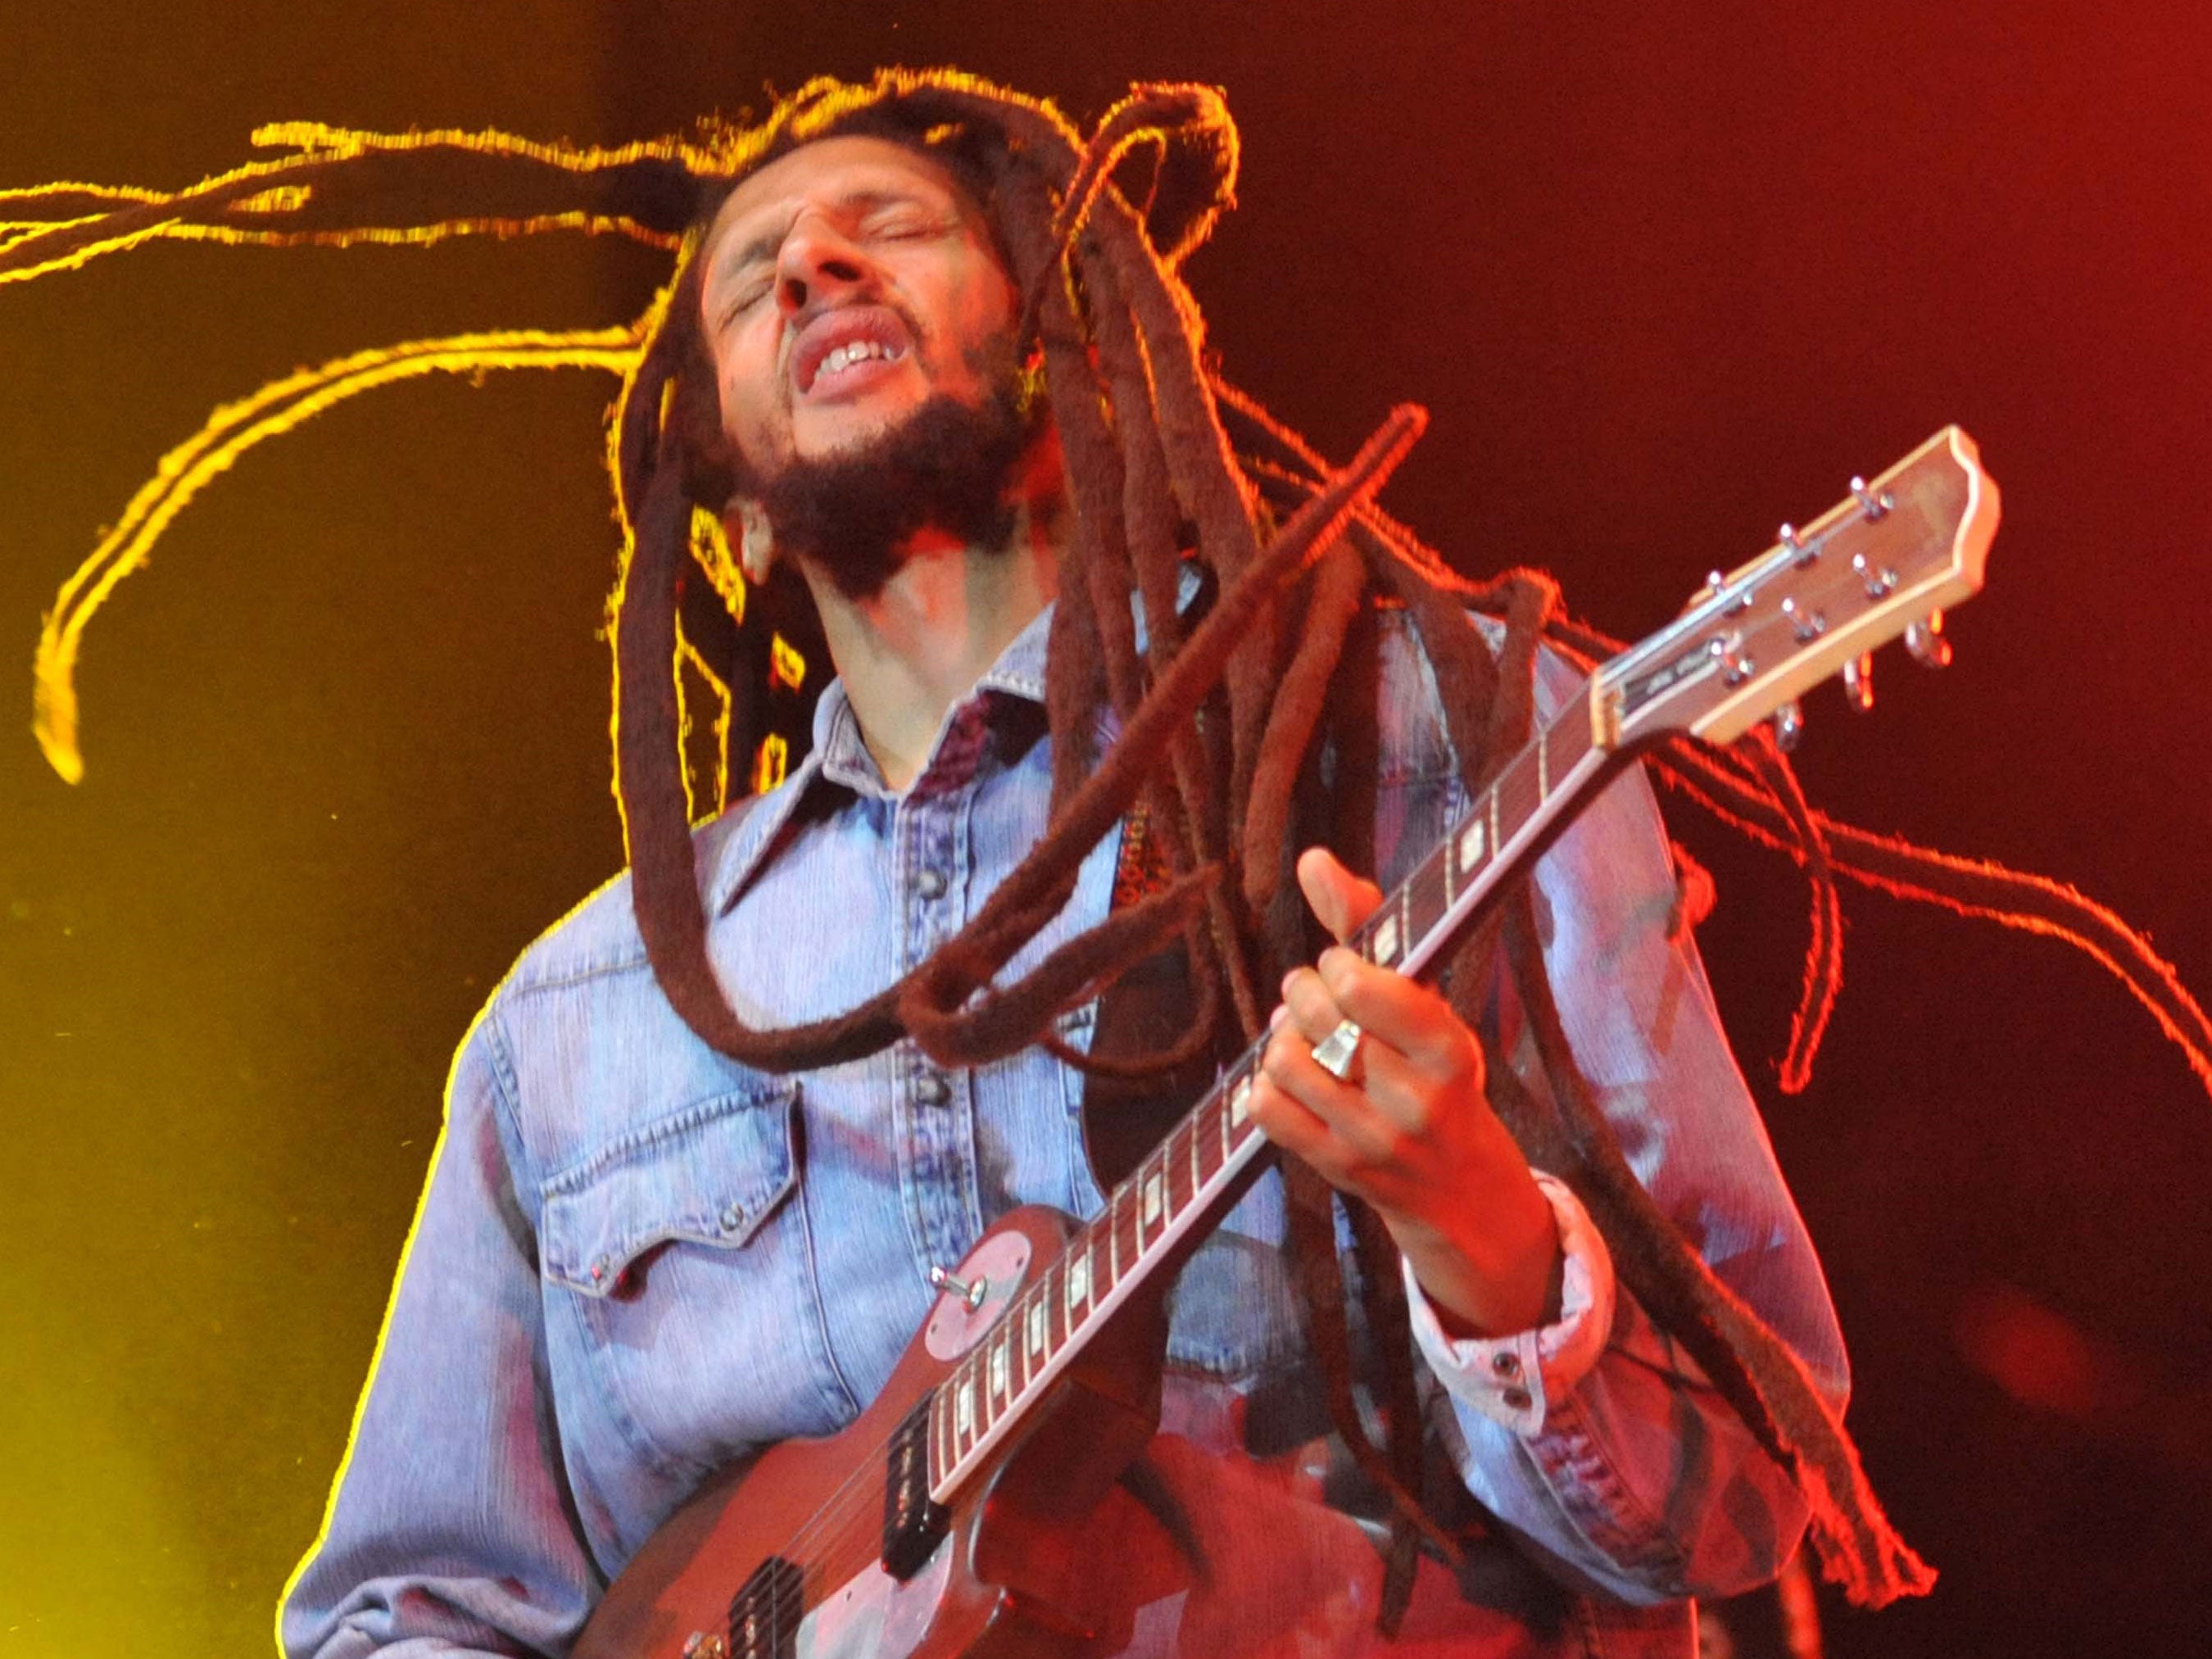 Julian Marley performs in concert in Rabat, Morocco